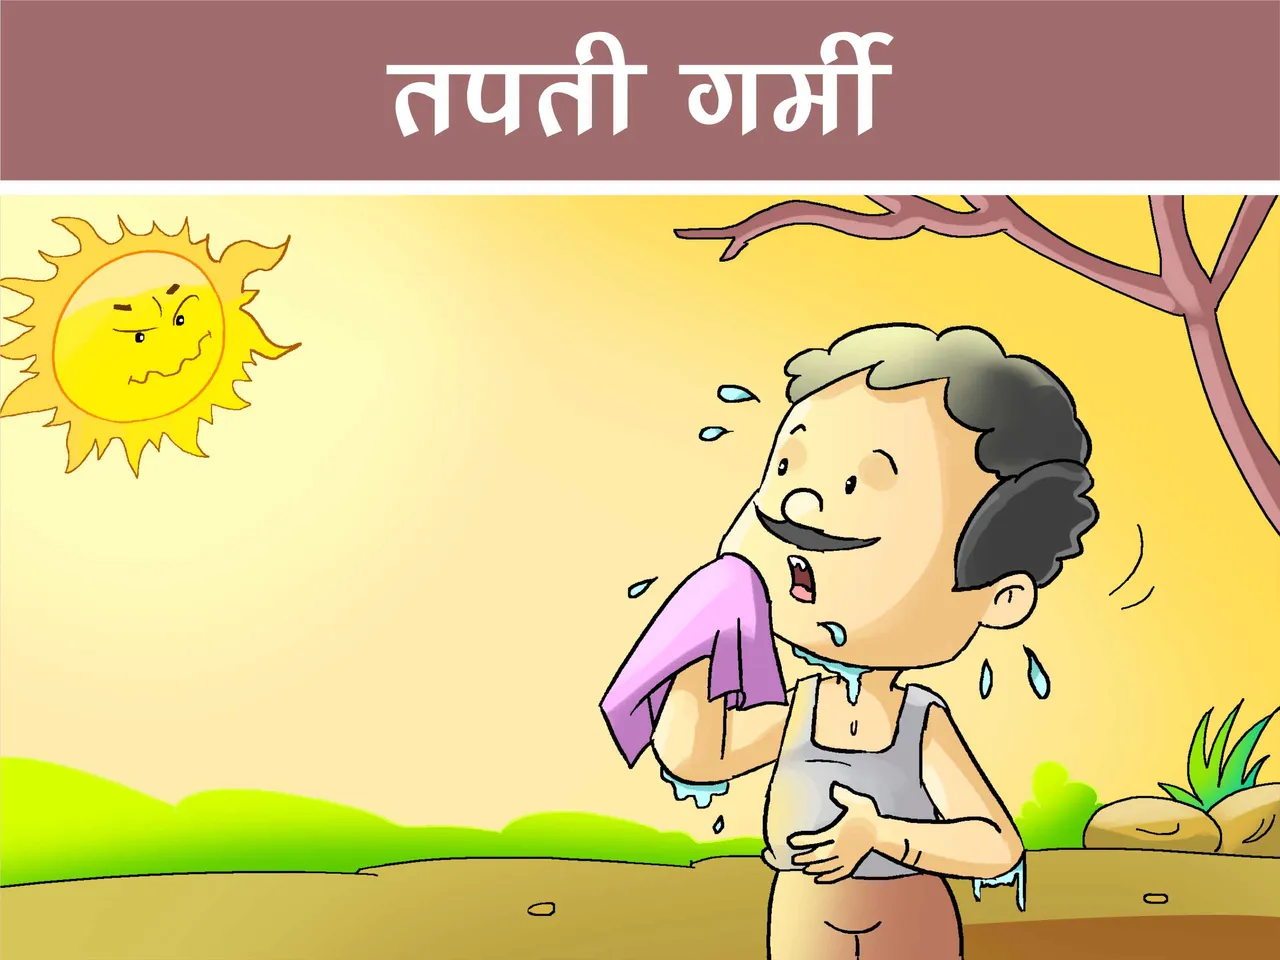 Hot summer day cartoon image